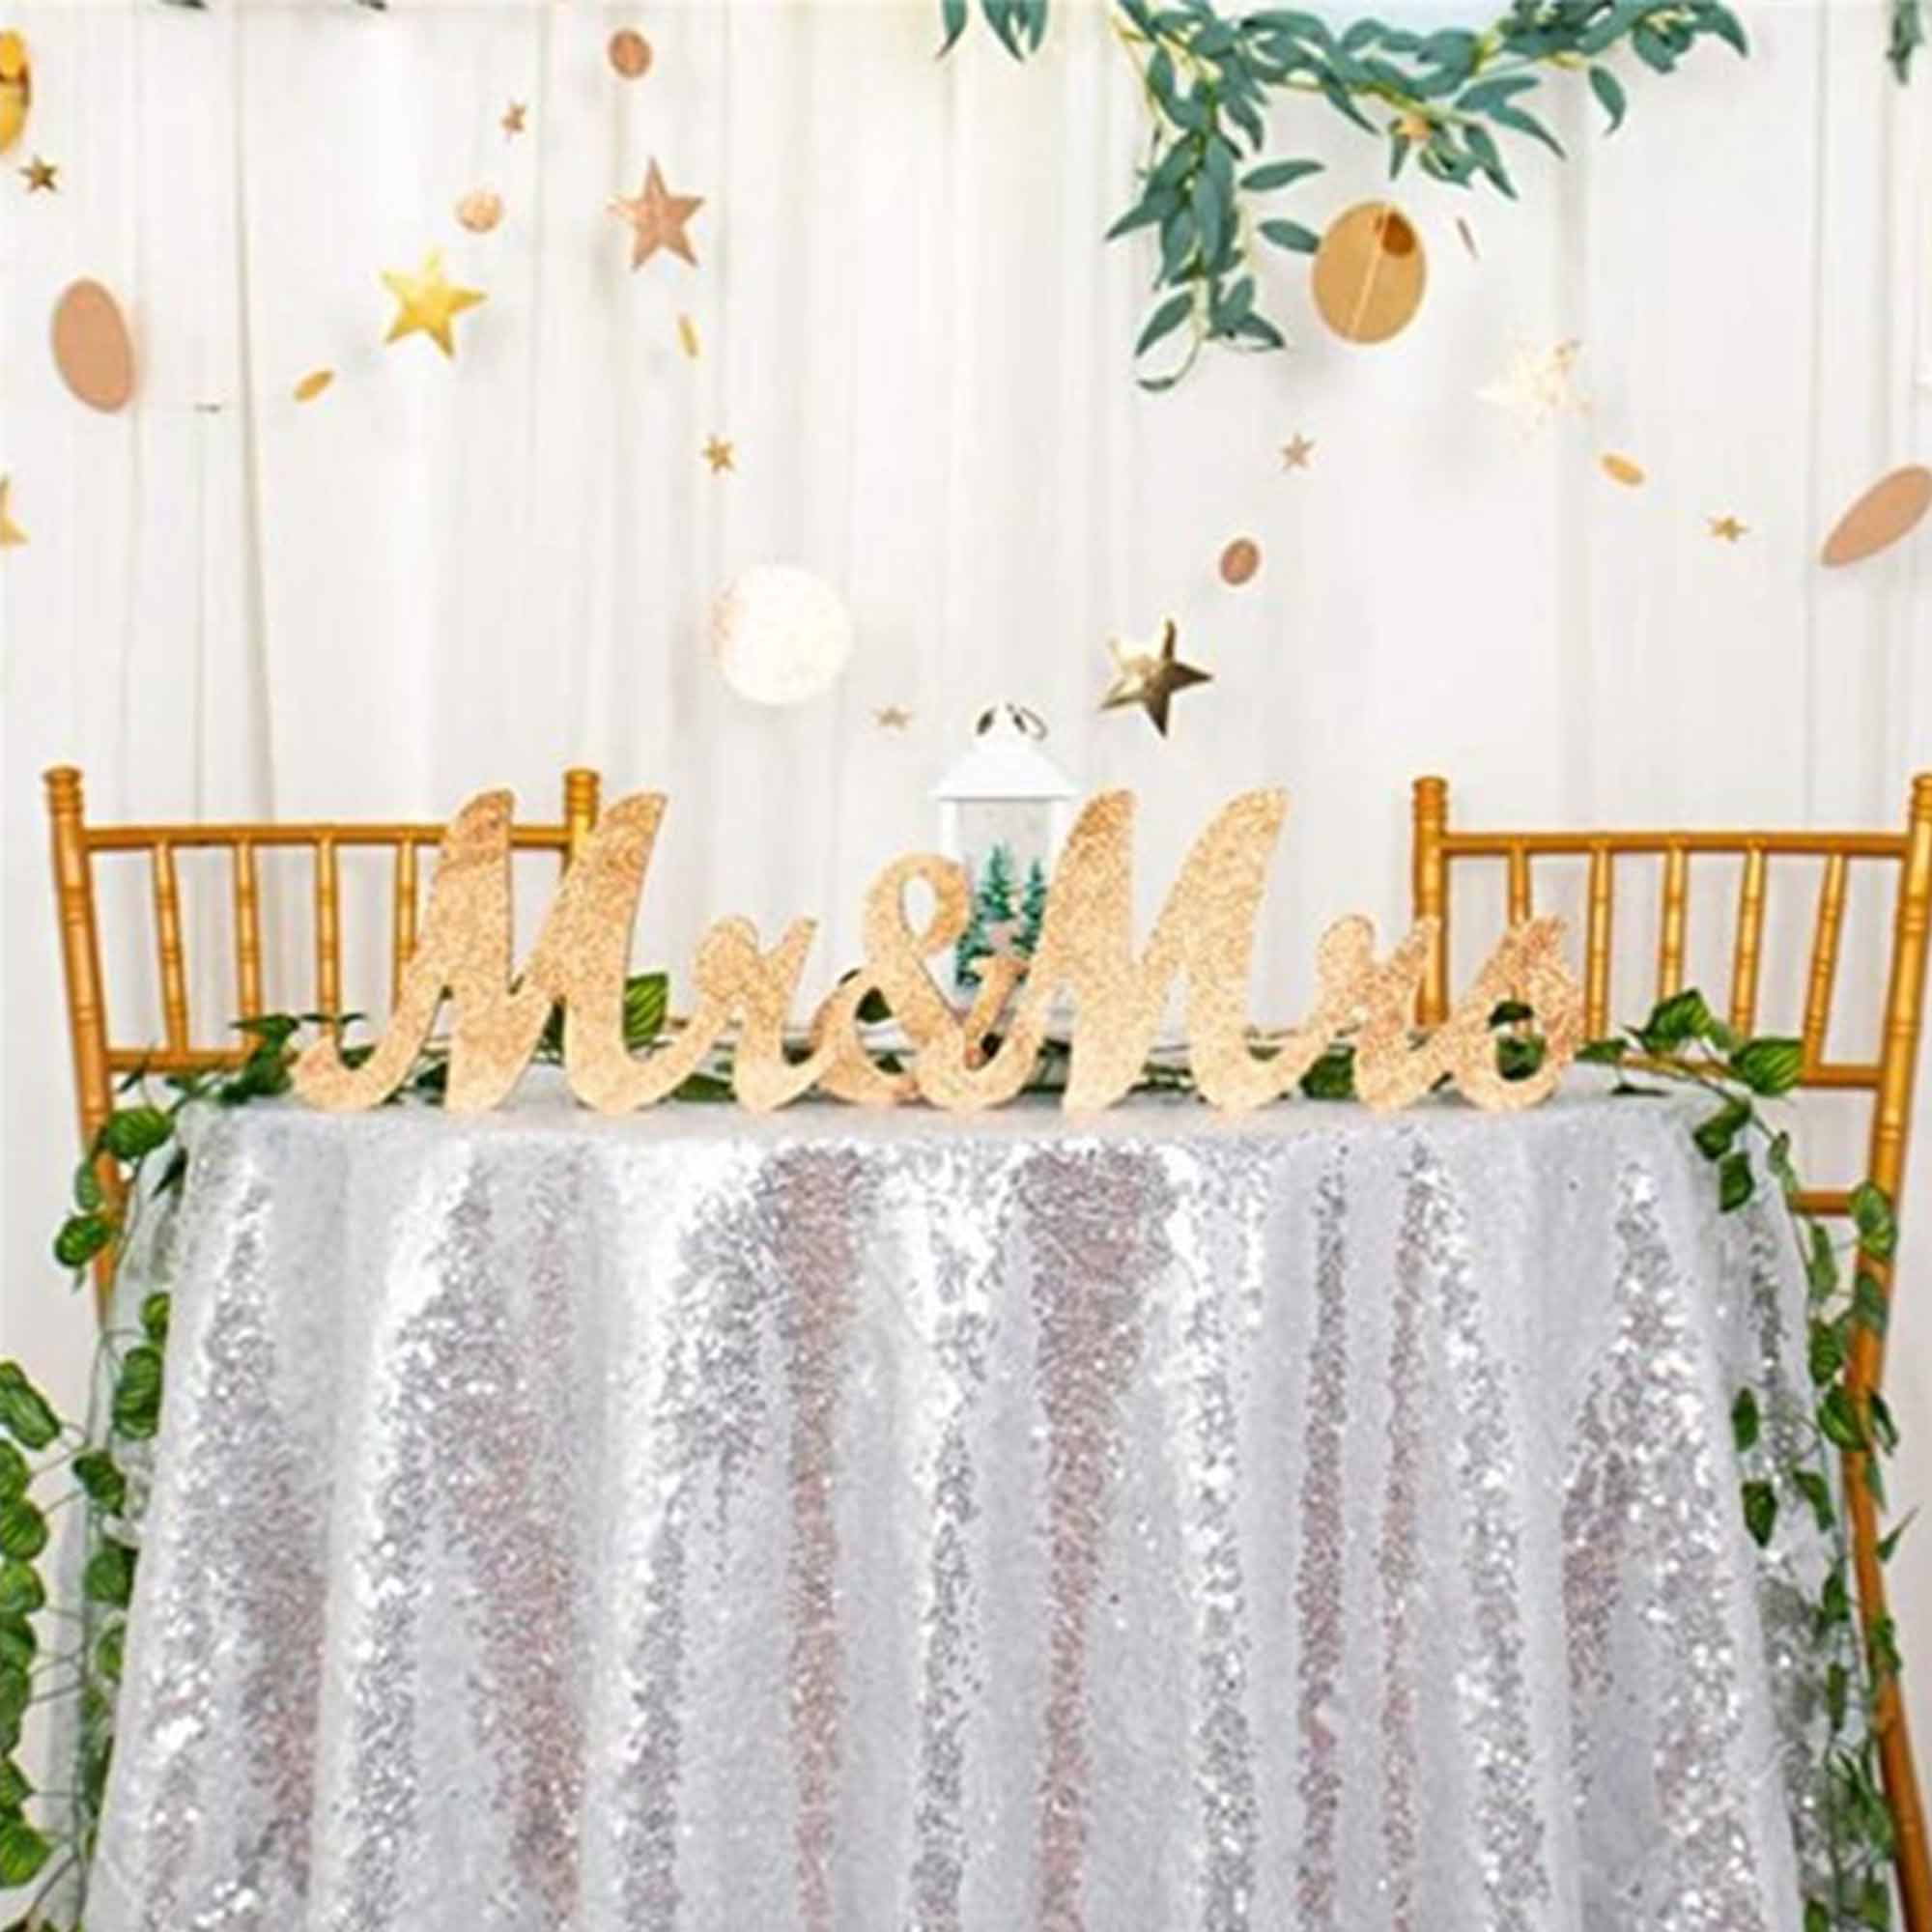 Glitter Felt Art Paint Liqui Party Decorations 10g Set Confetti Splash Desk  Sequins For Wedding Birthday Baby Shower Decor